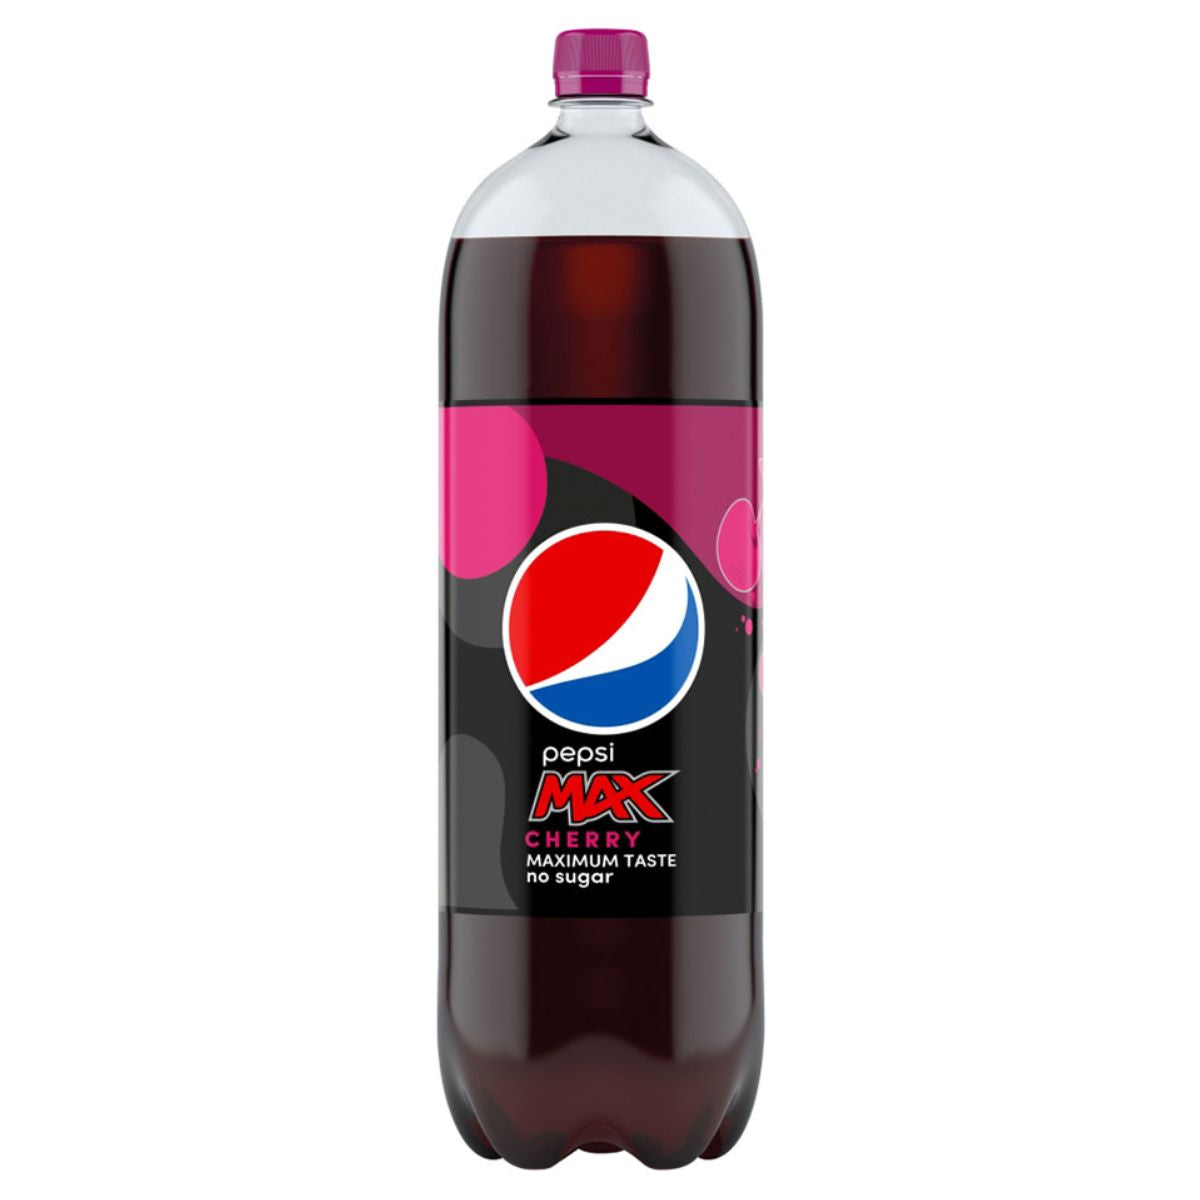 A bottle of Pepsi - Max Cherry No Sugar Cola - 2L pink.